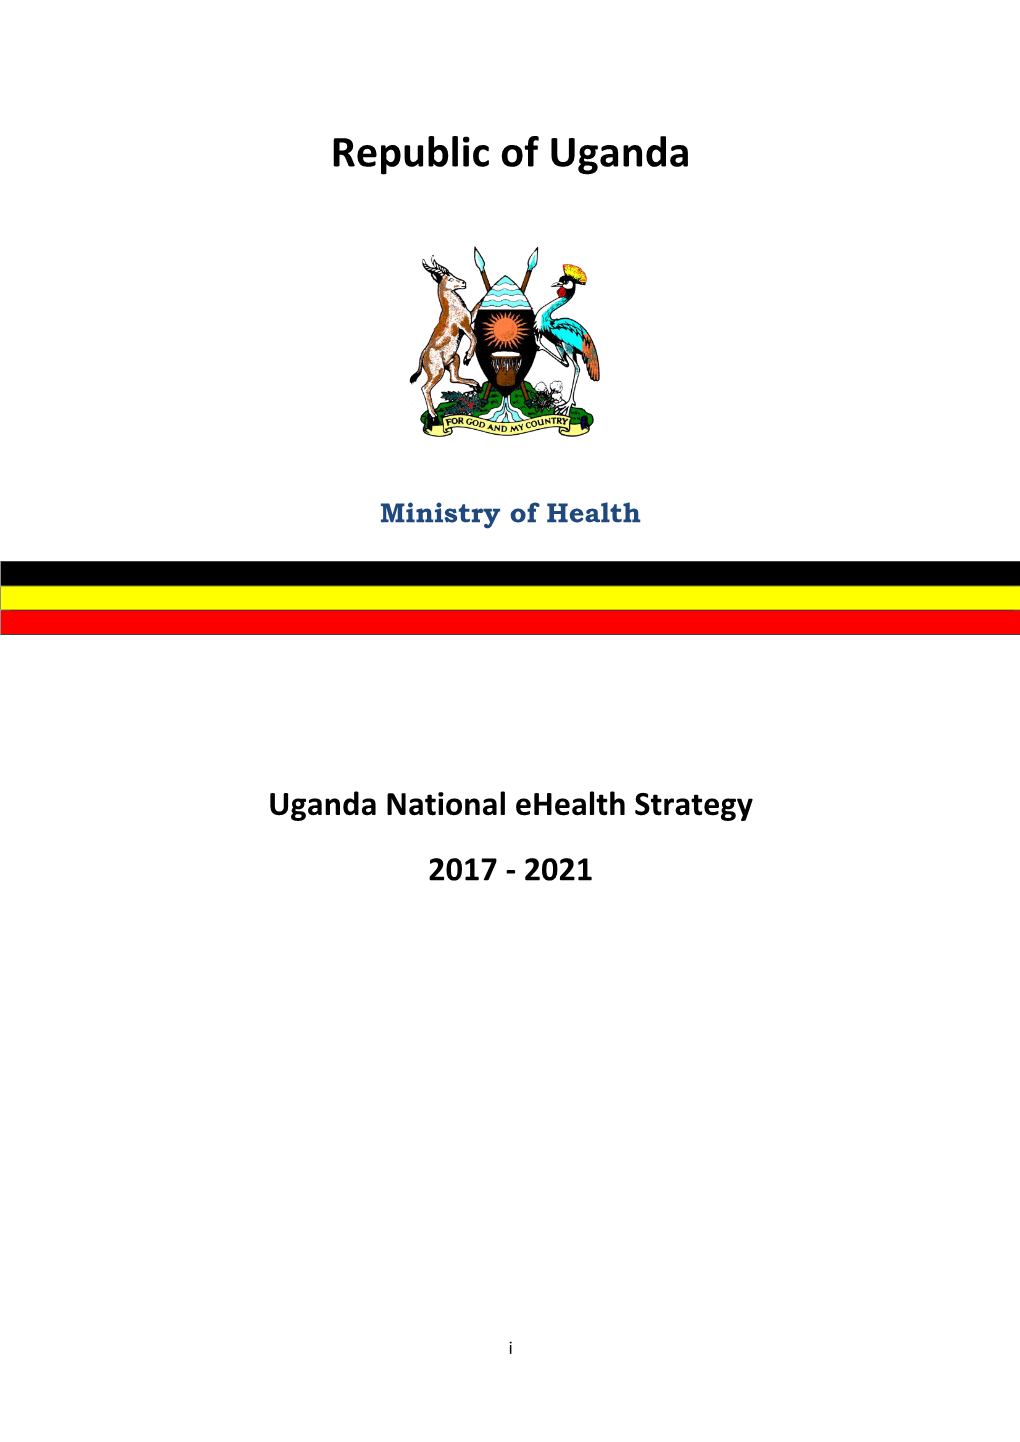 Uganda National Ehealth Strategy 2017–2021